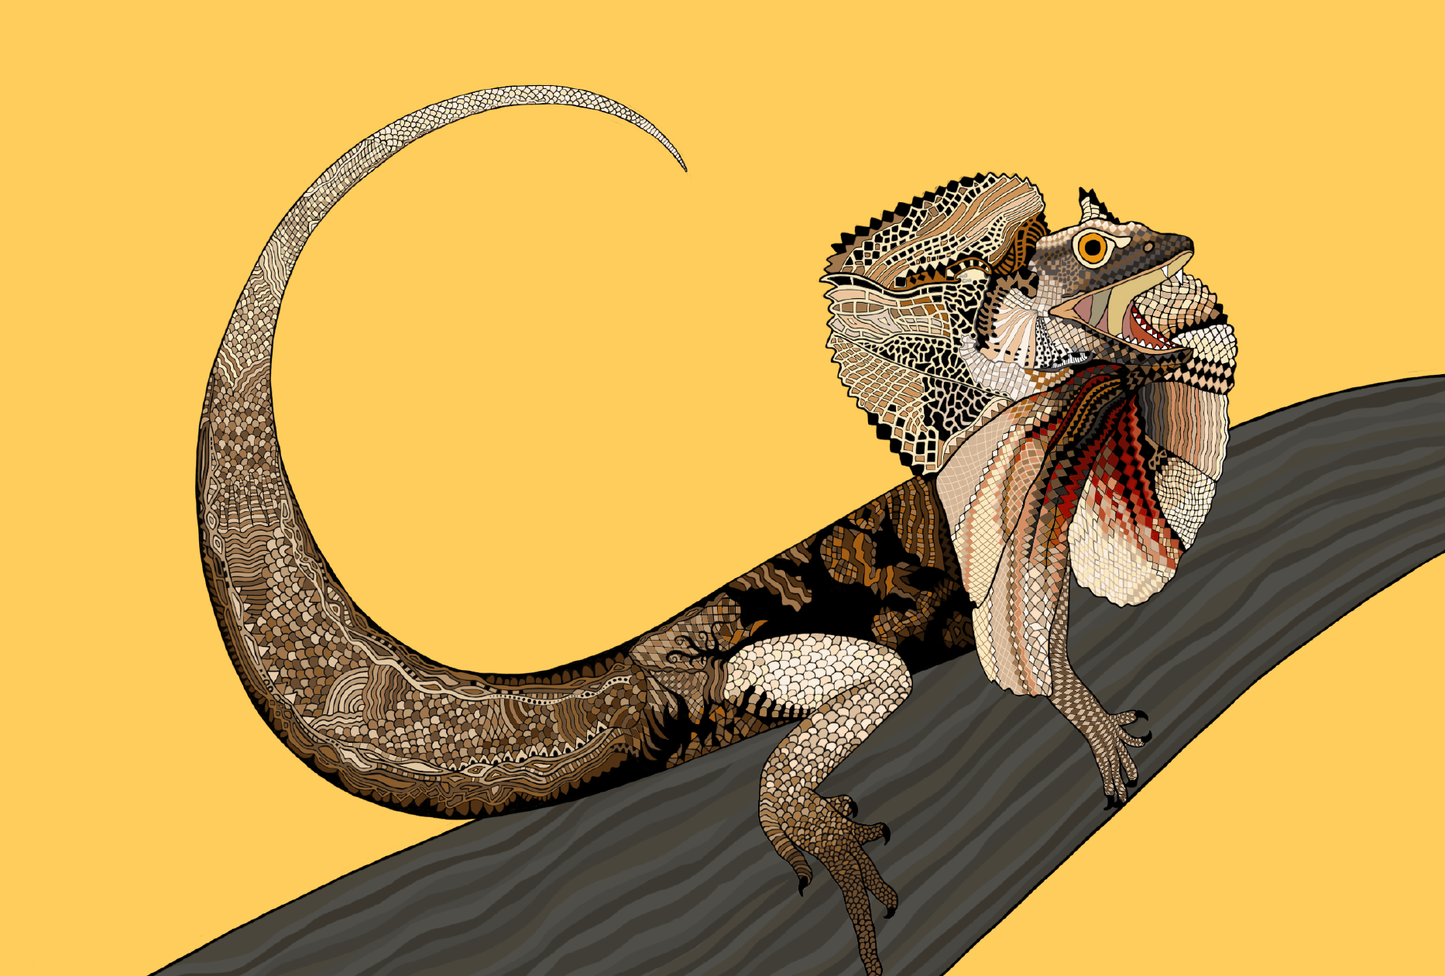 Australian Animals Card - Frillnecked Lizard